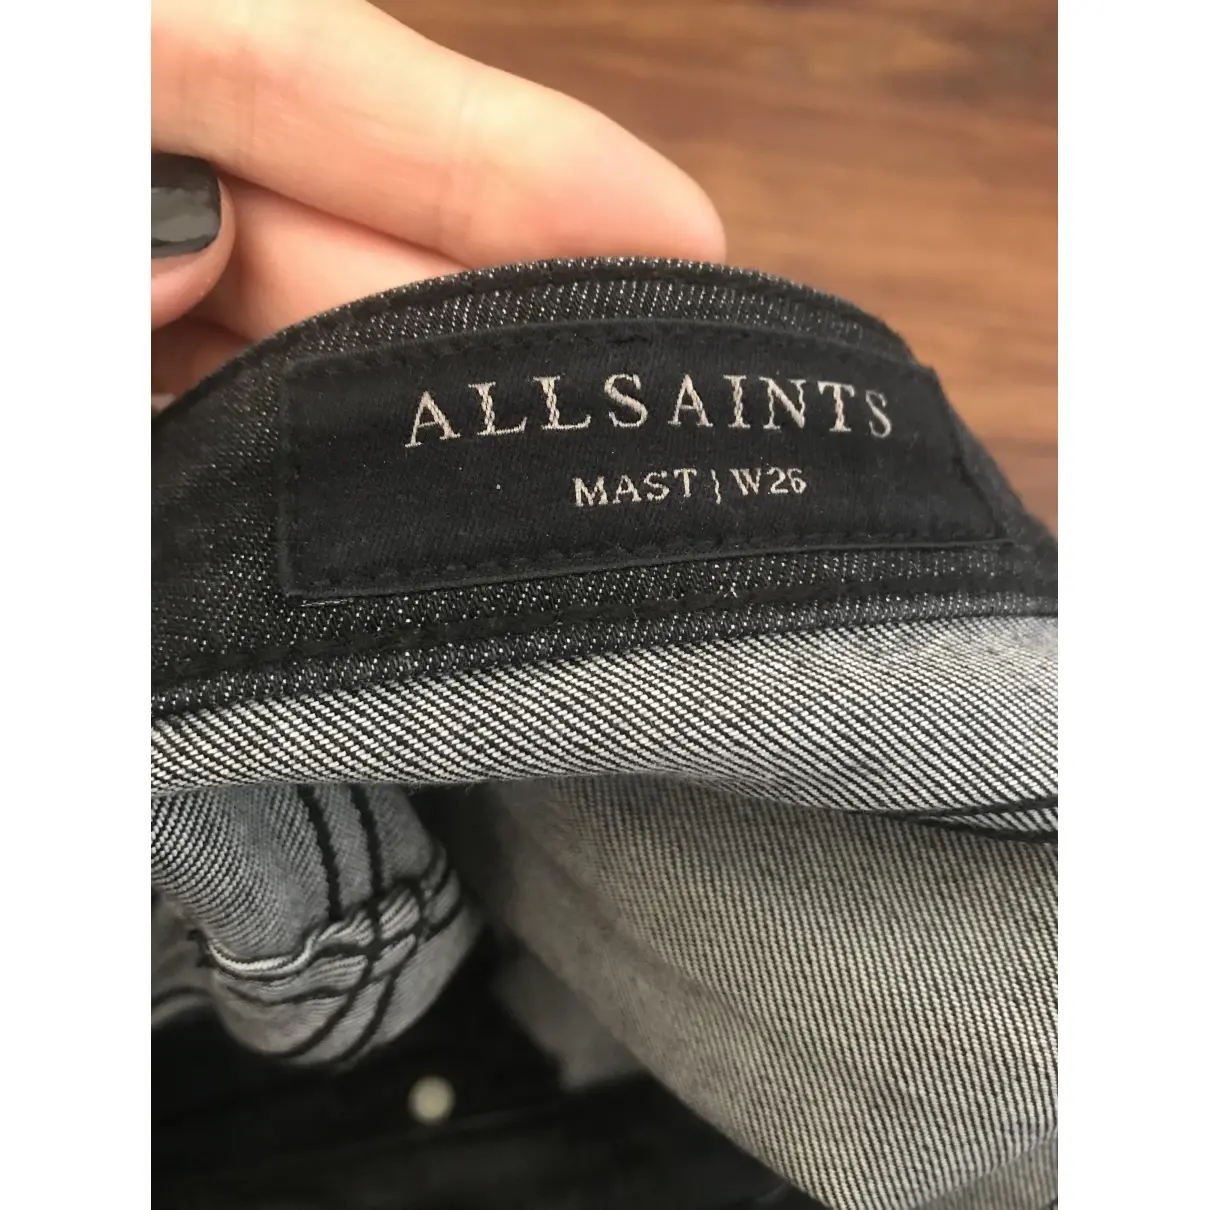 Buy All Saints Slim jeans online